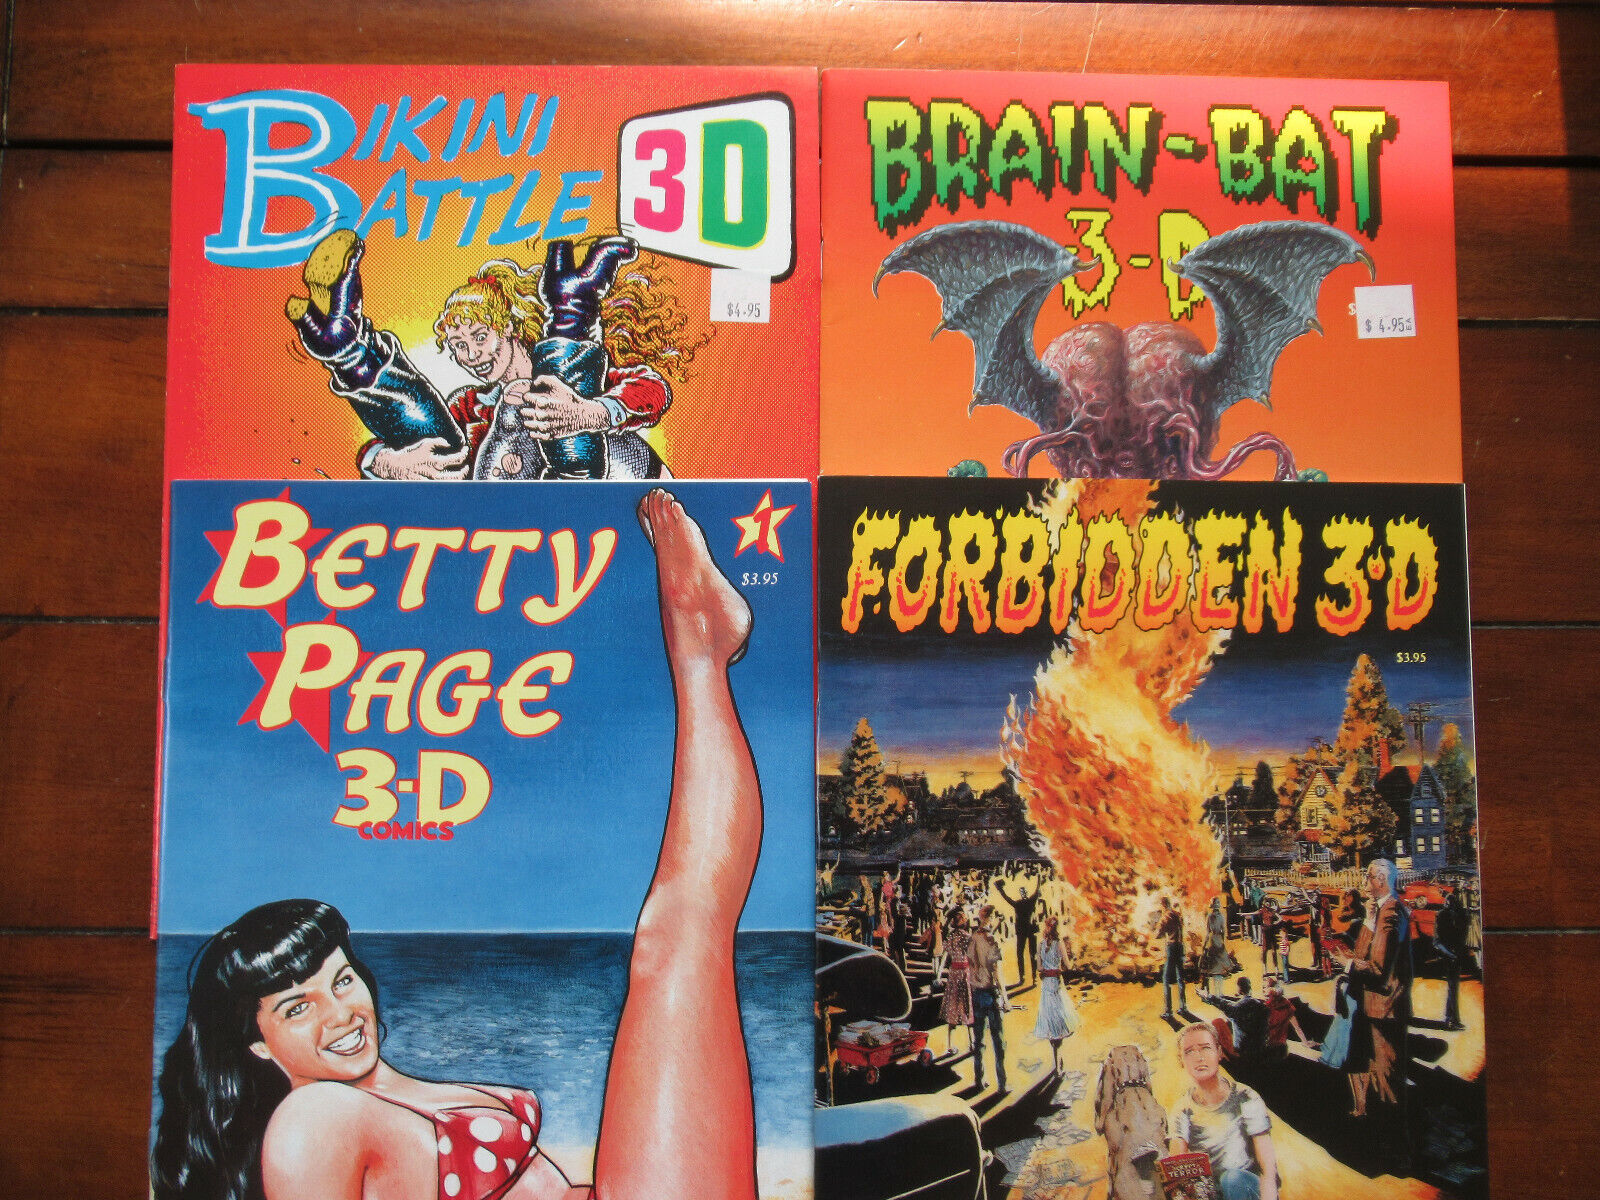 3-D comic book lot - Bikini Battle - Forbidden - Betty Page - Brain Bat